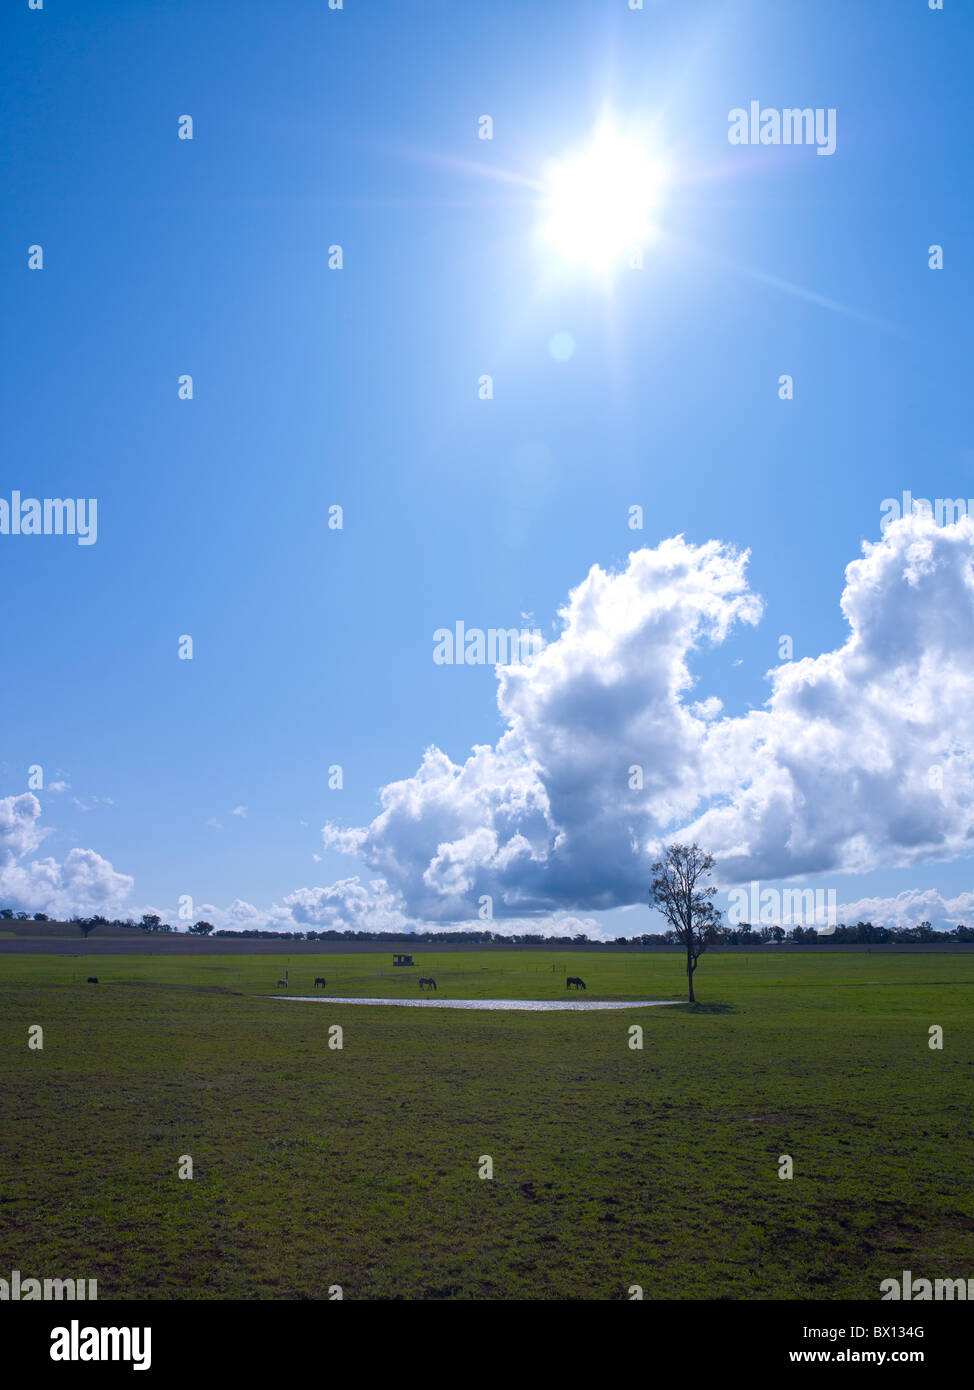 Horses in paddock & blue sky Stock Photo